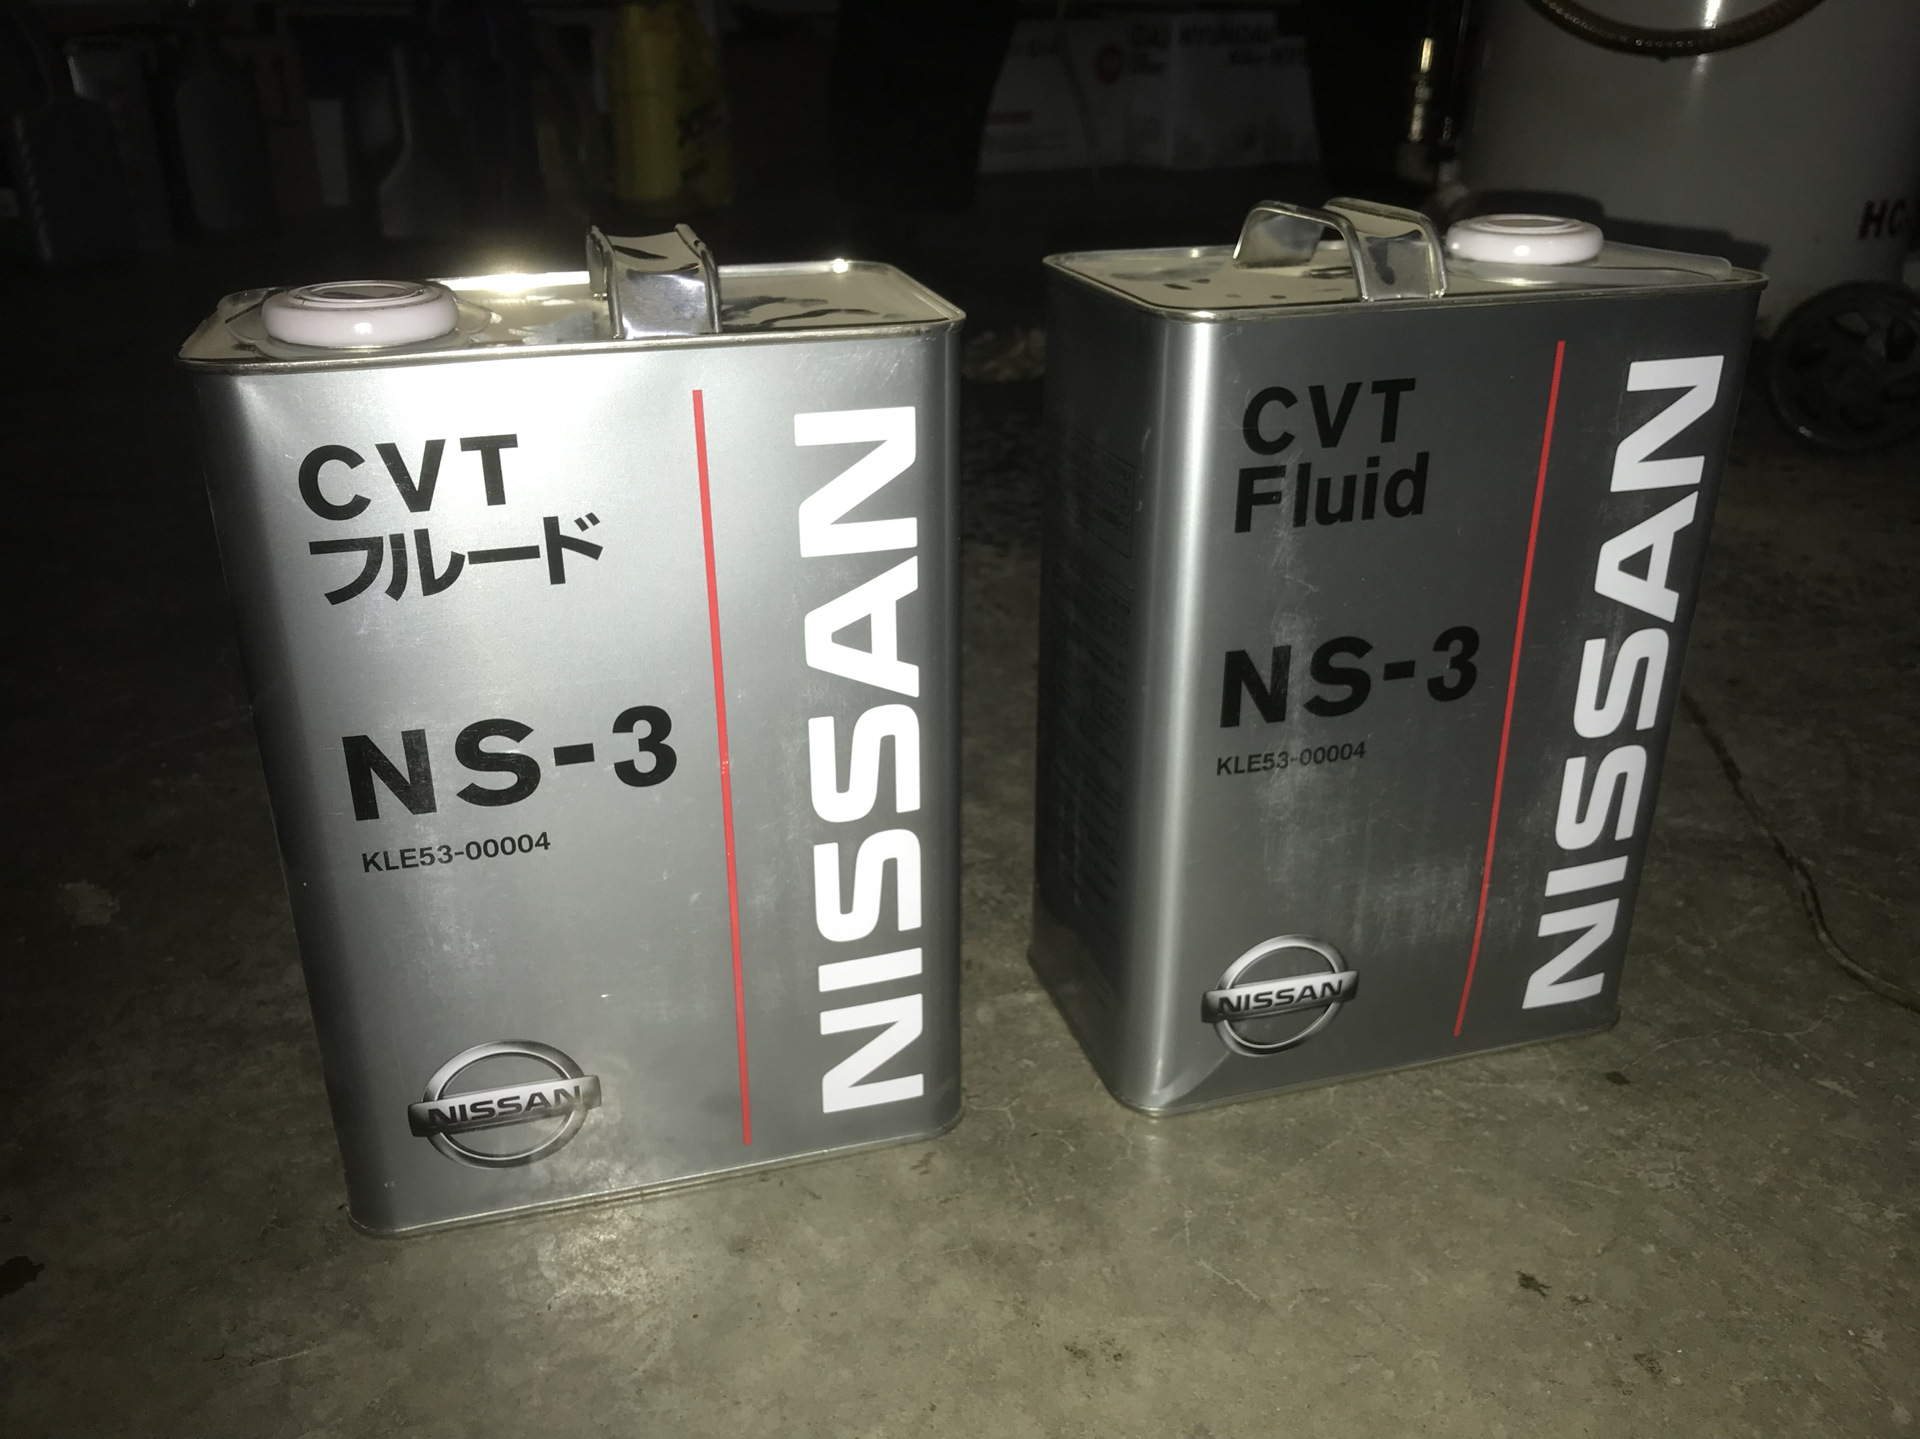 Ниссан теана масло в коробку. Kle5300004 Nissan CVT NS-3. Масло в вариатор Ниссан Теана j33 2.5 ns3. Фильтр вариатора Ниссан Теана 3.5. Nissan CVT NS-2 (5л).